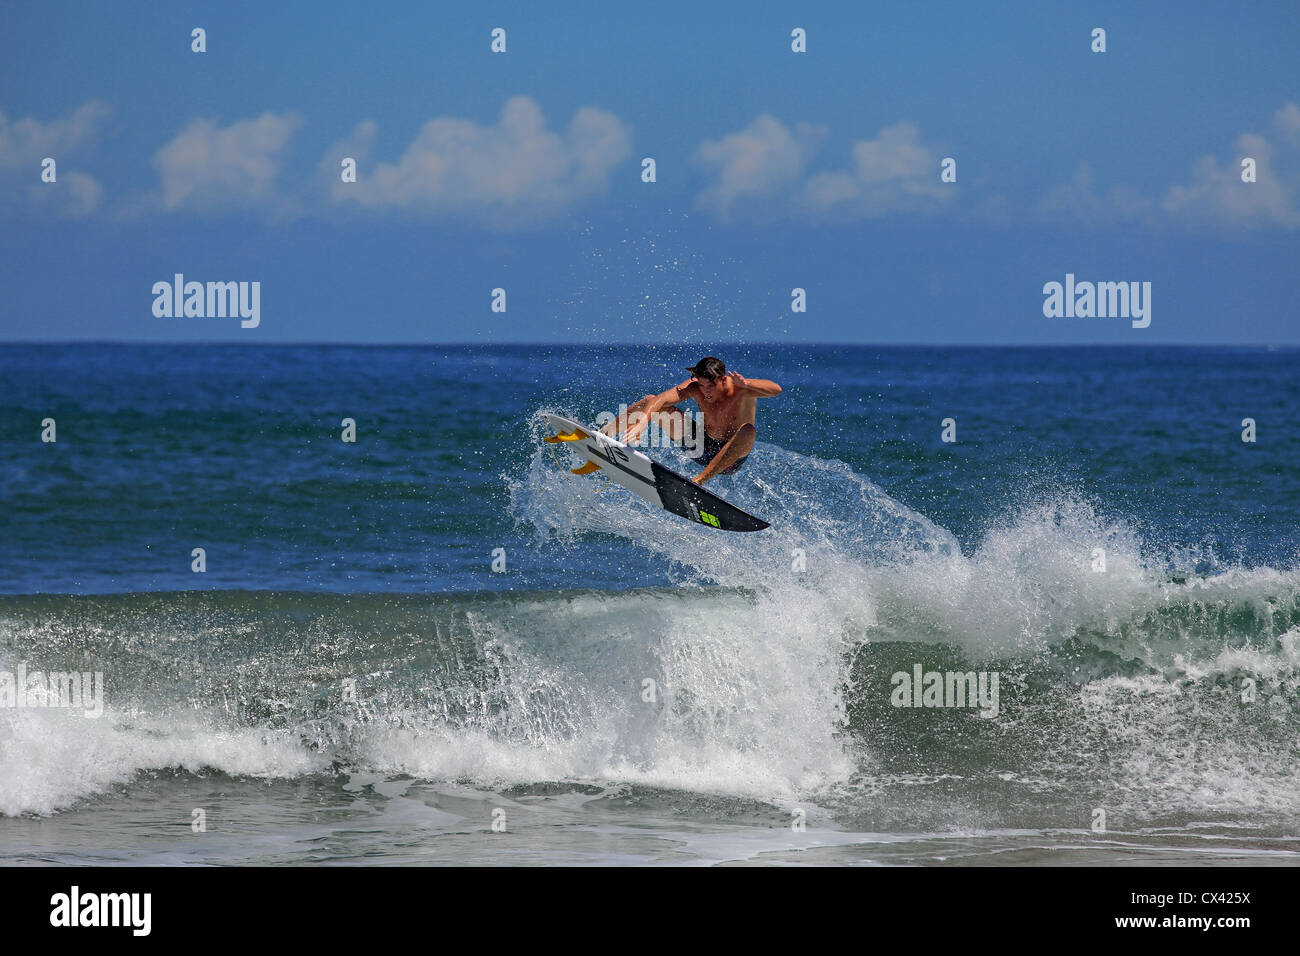 Australian surfer surfing a beach break wave in Sumatra, Indonesia. Stock Photo